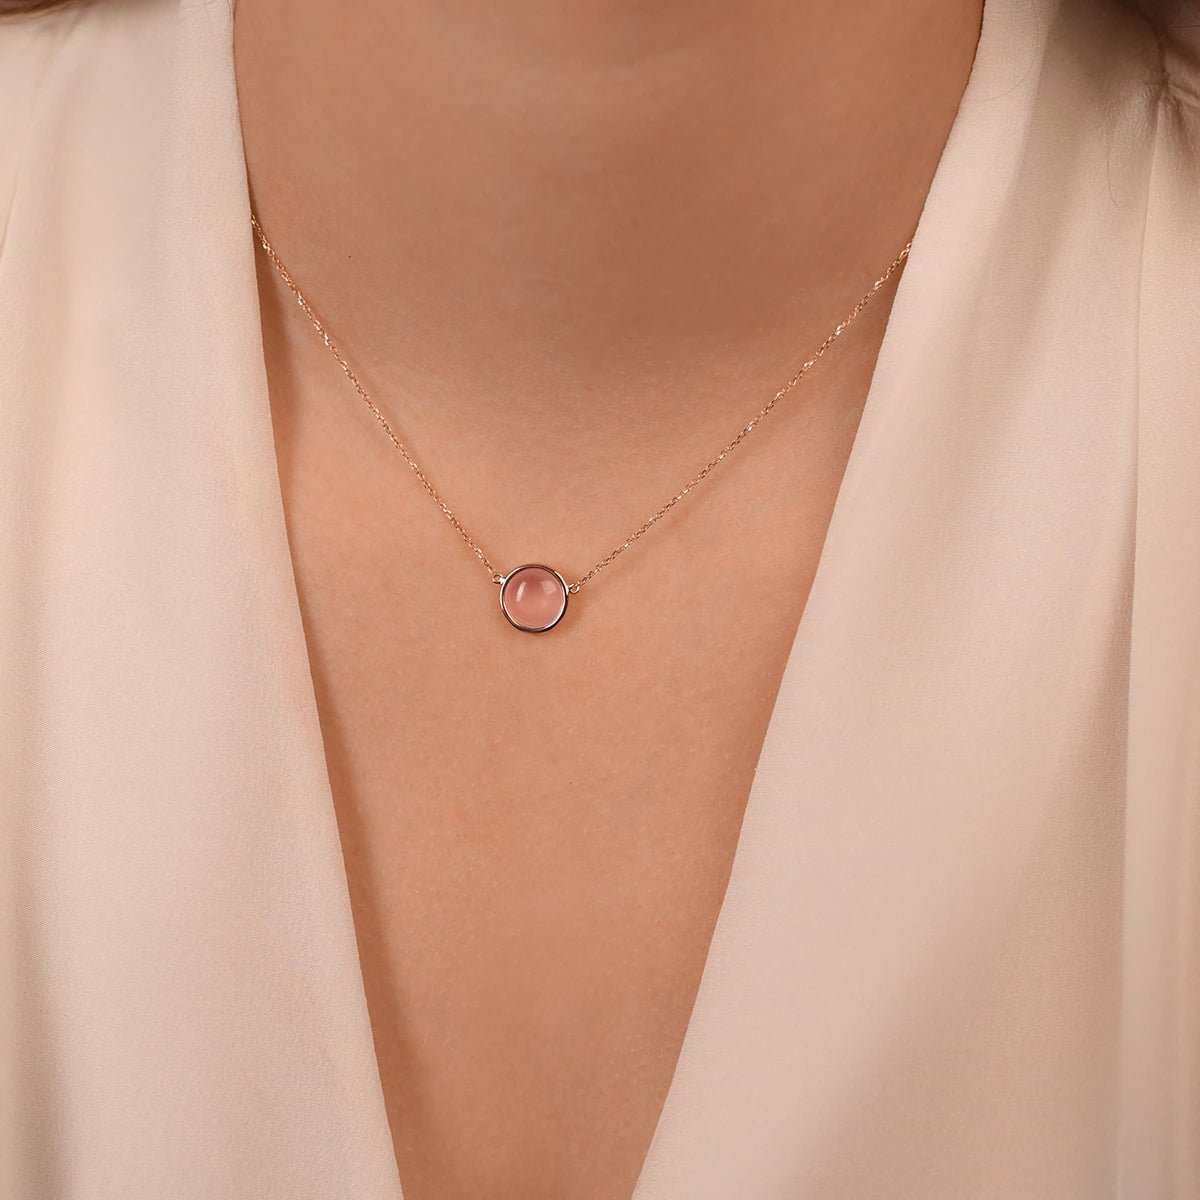 Bezel Set Rose Quartz Station Necklace in Solid 14k Rose Gold Necklaces Estella Collection #product_description# 17182 14k Make Collection pendant chain #tag4# #tag5# #tag6# #tag7# #tag8# #tag9# #tag10#